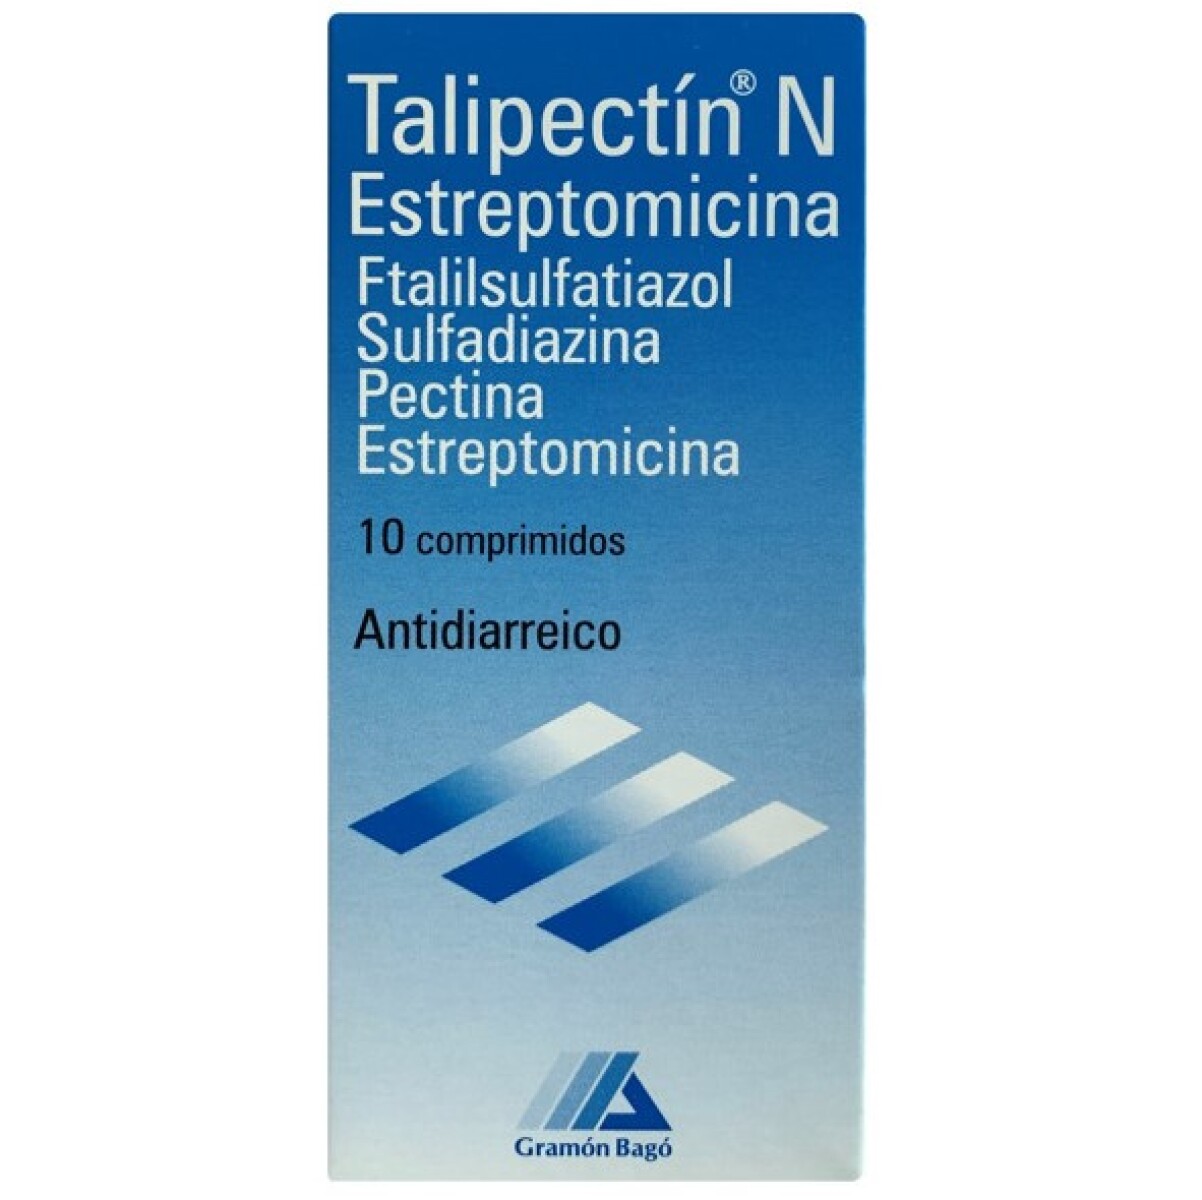 Talipectin N Estrepto x 10 COM 